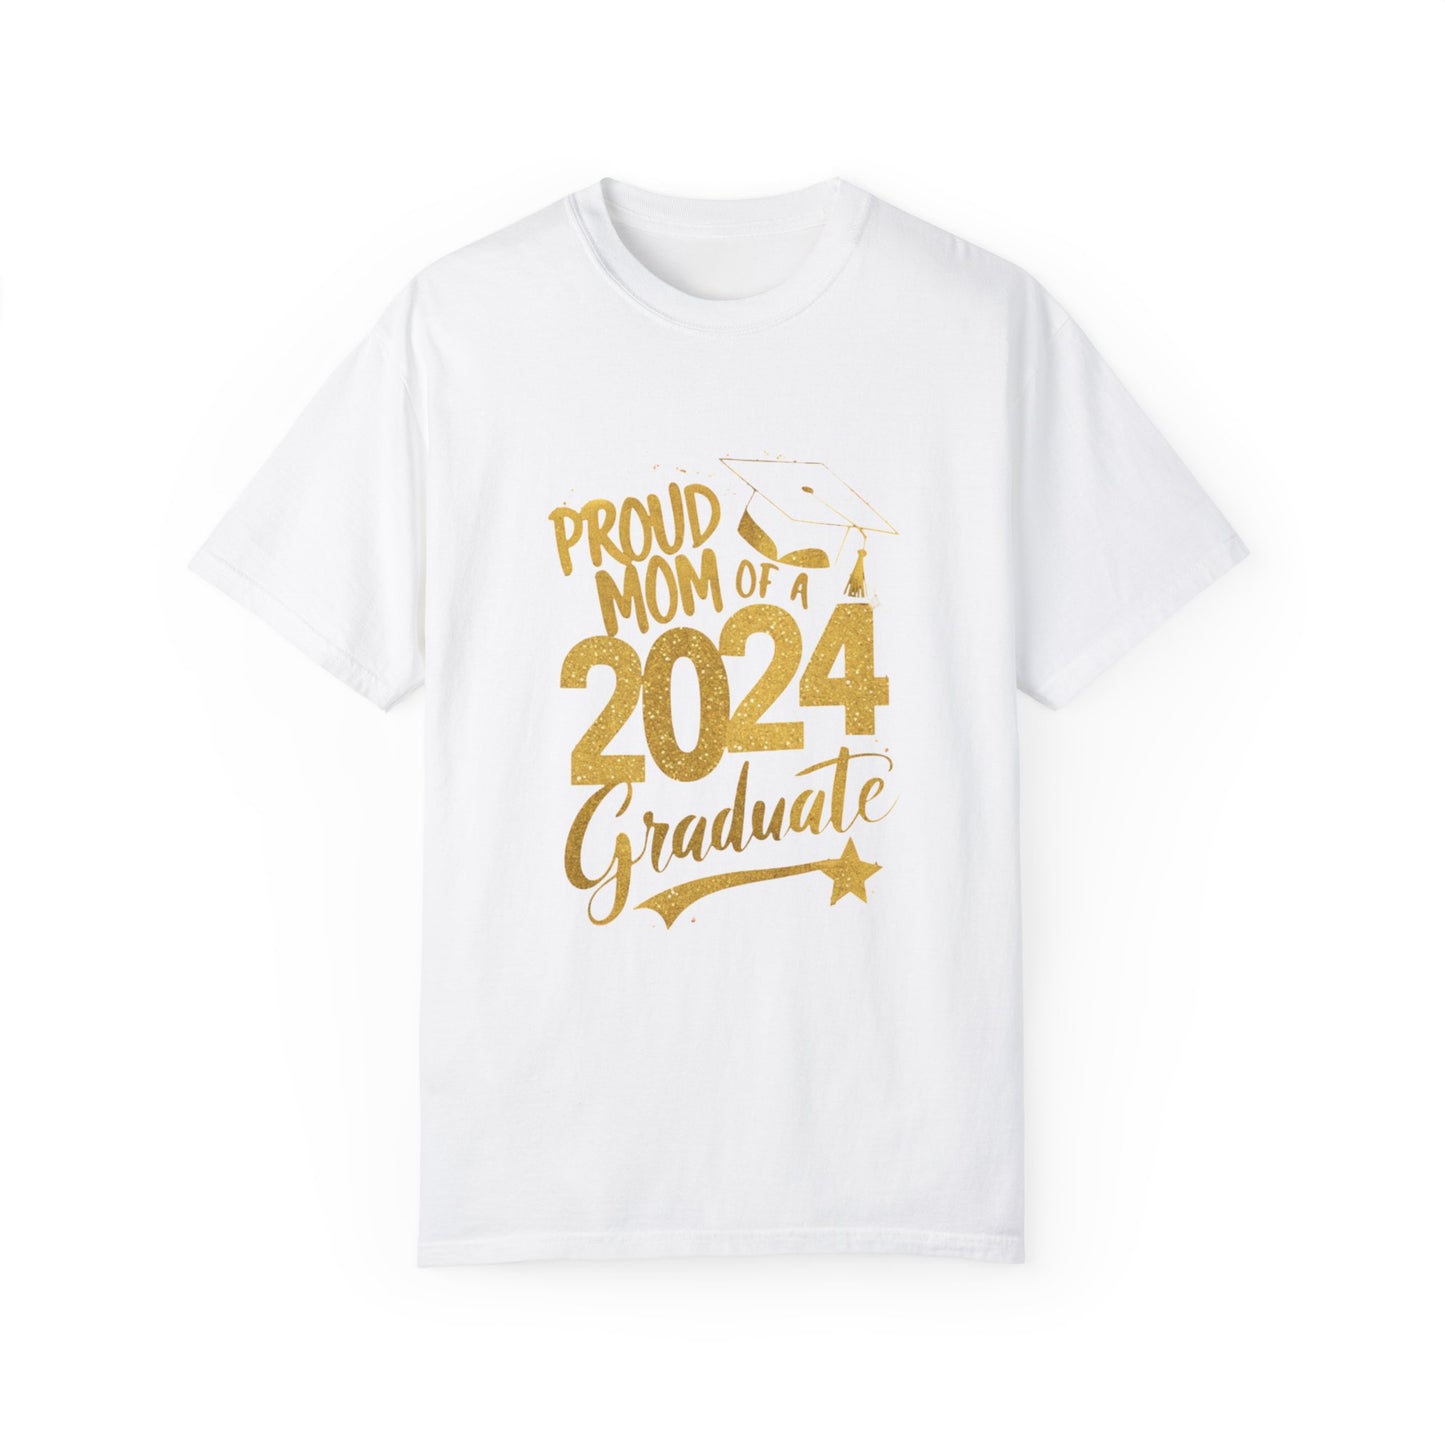 Proud of Mom 2024 Graduate Unisex Garment-dyed T-shirt Cotton Funny Humorous Graphic Soft Premium Unisex Men Women White T-shirt Birthday Gift-3